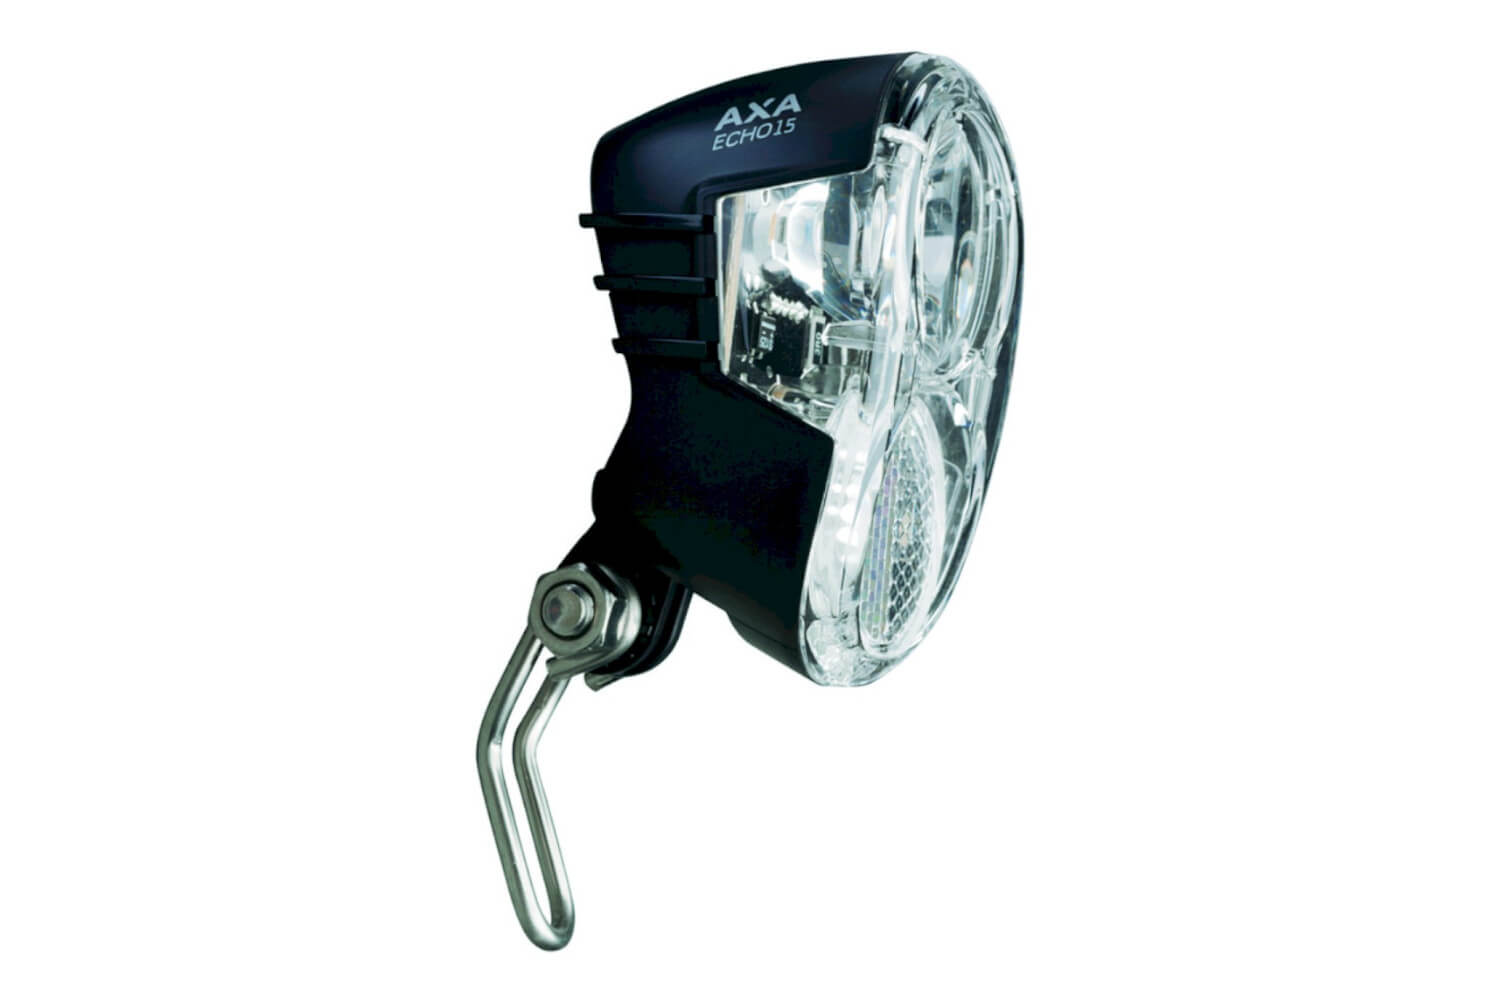 AXA Scheinwerfer LED 15 LUX  